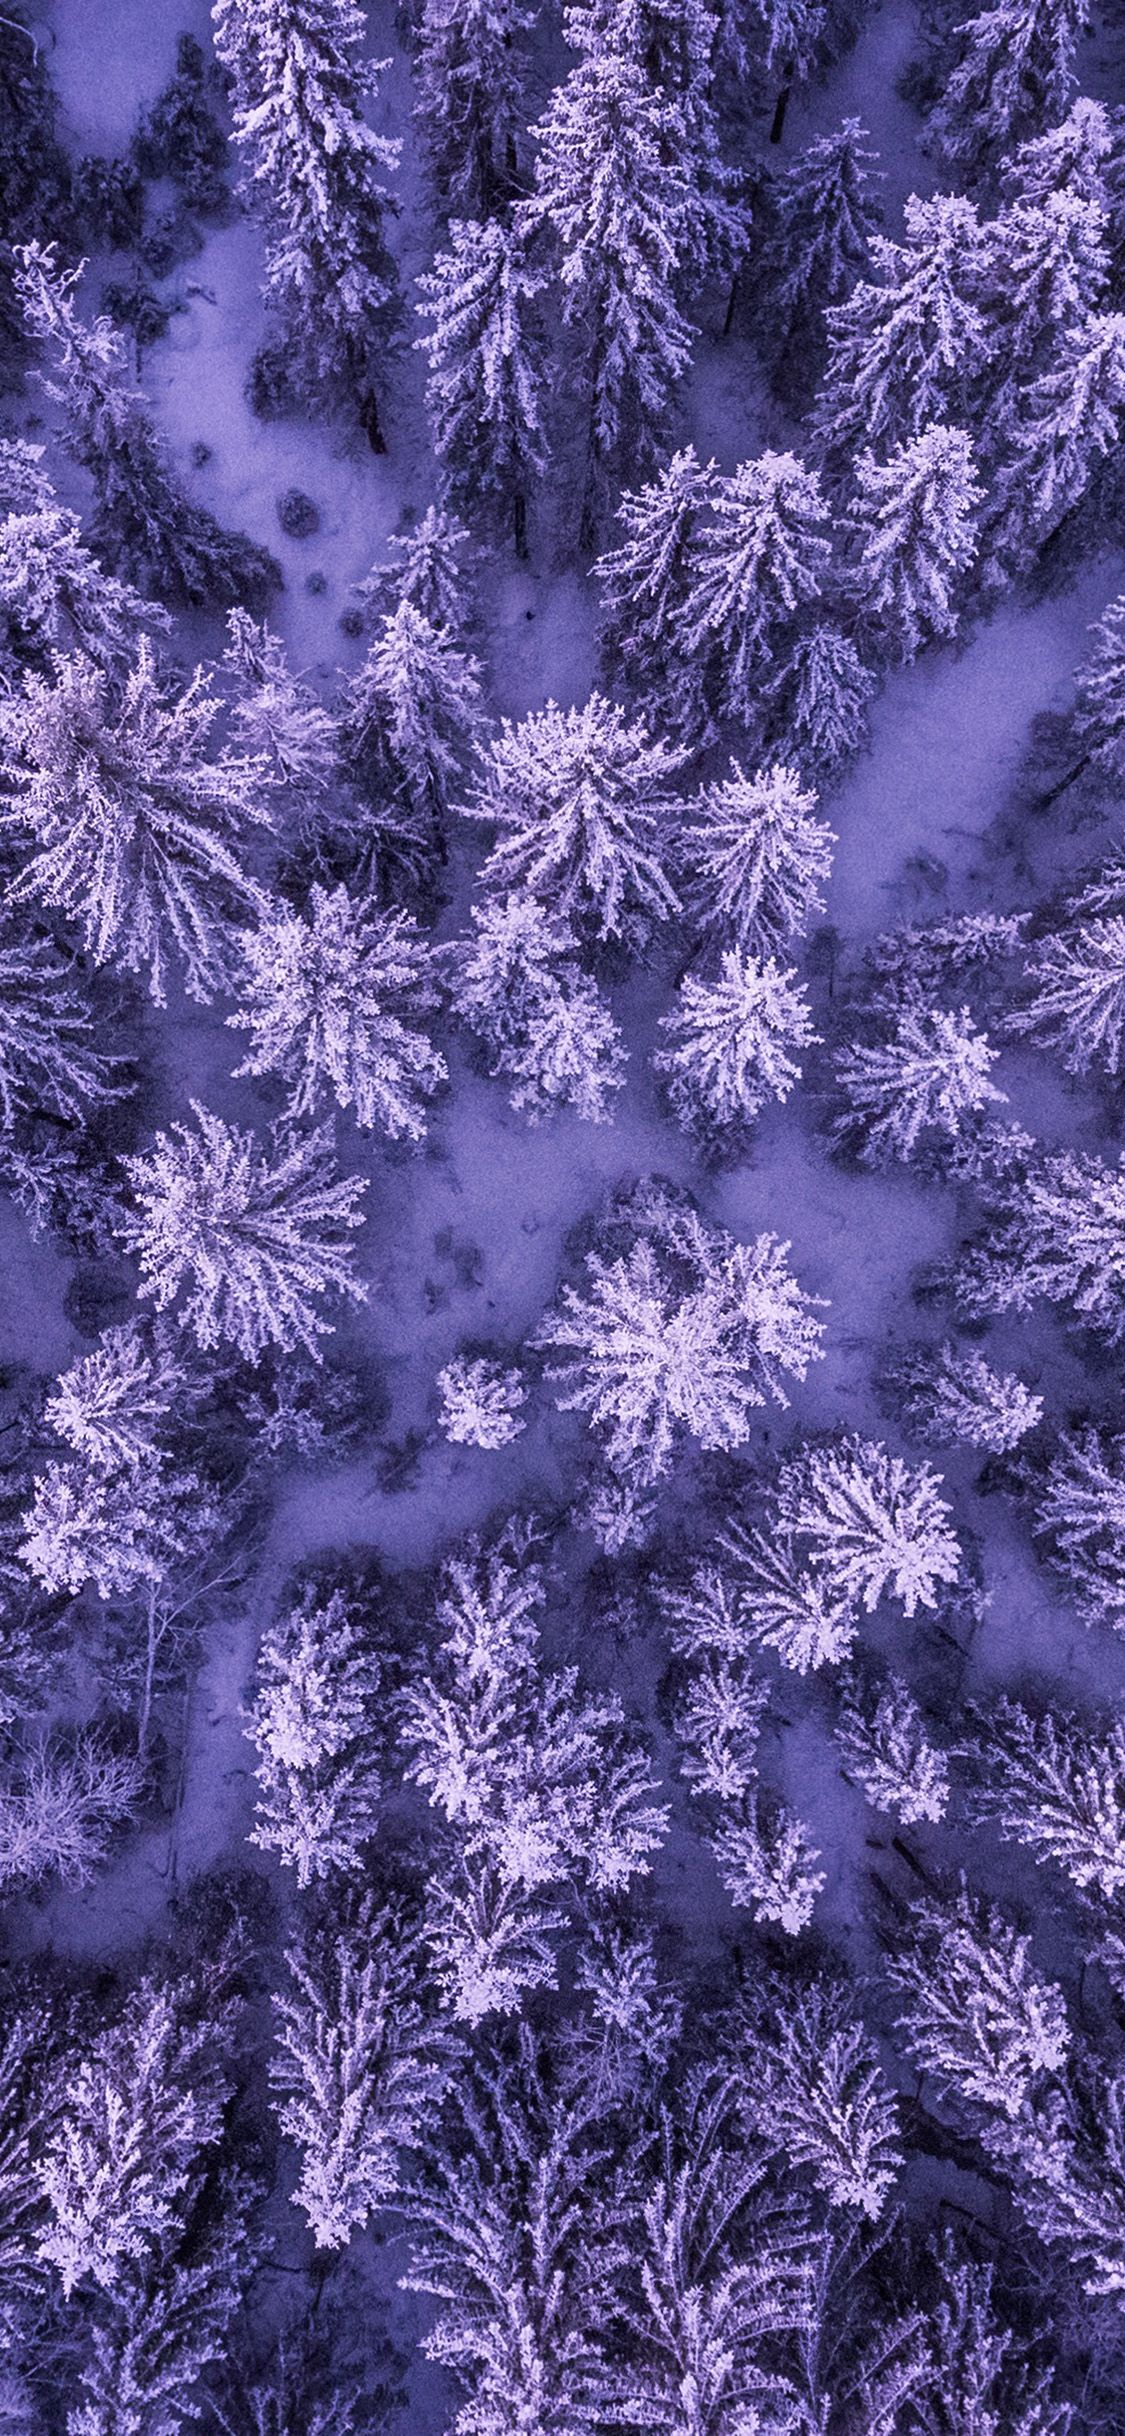 iPhone X wallpaper. nature tree purple earthview